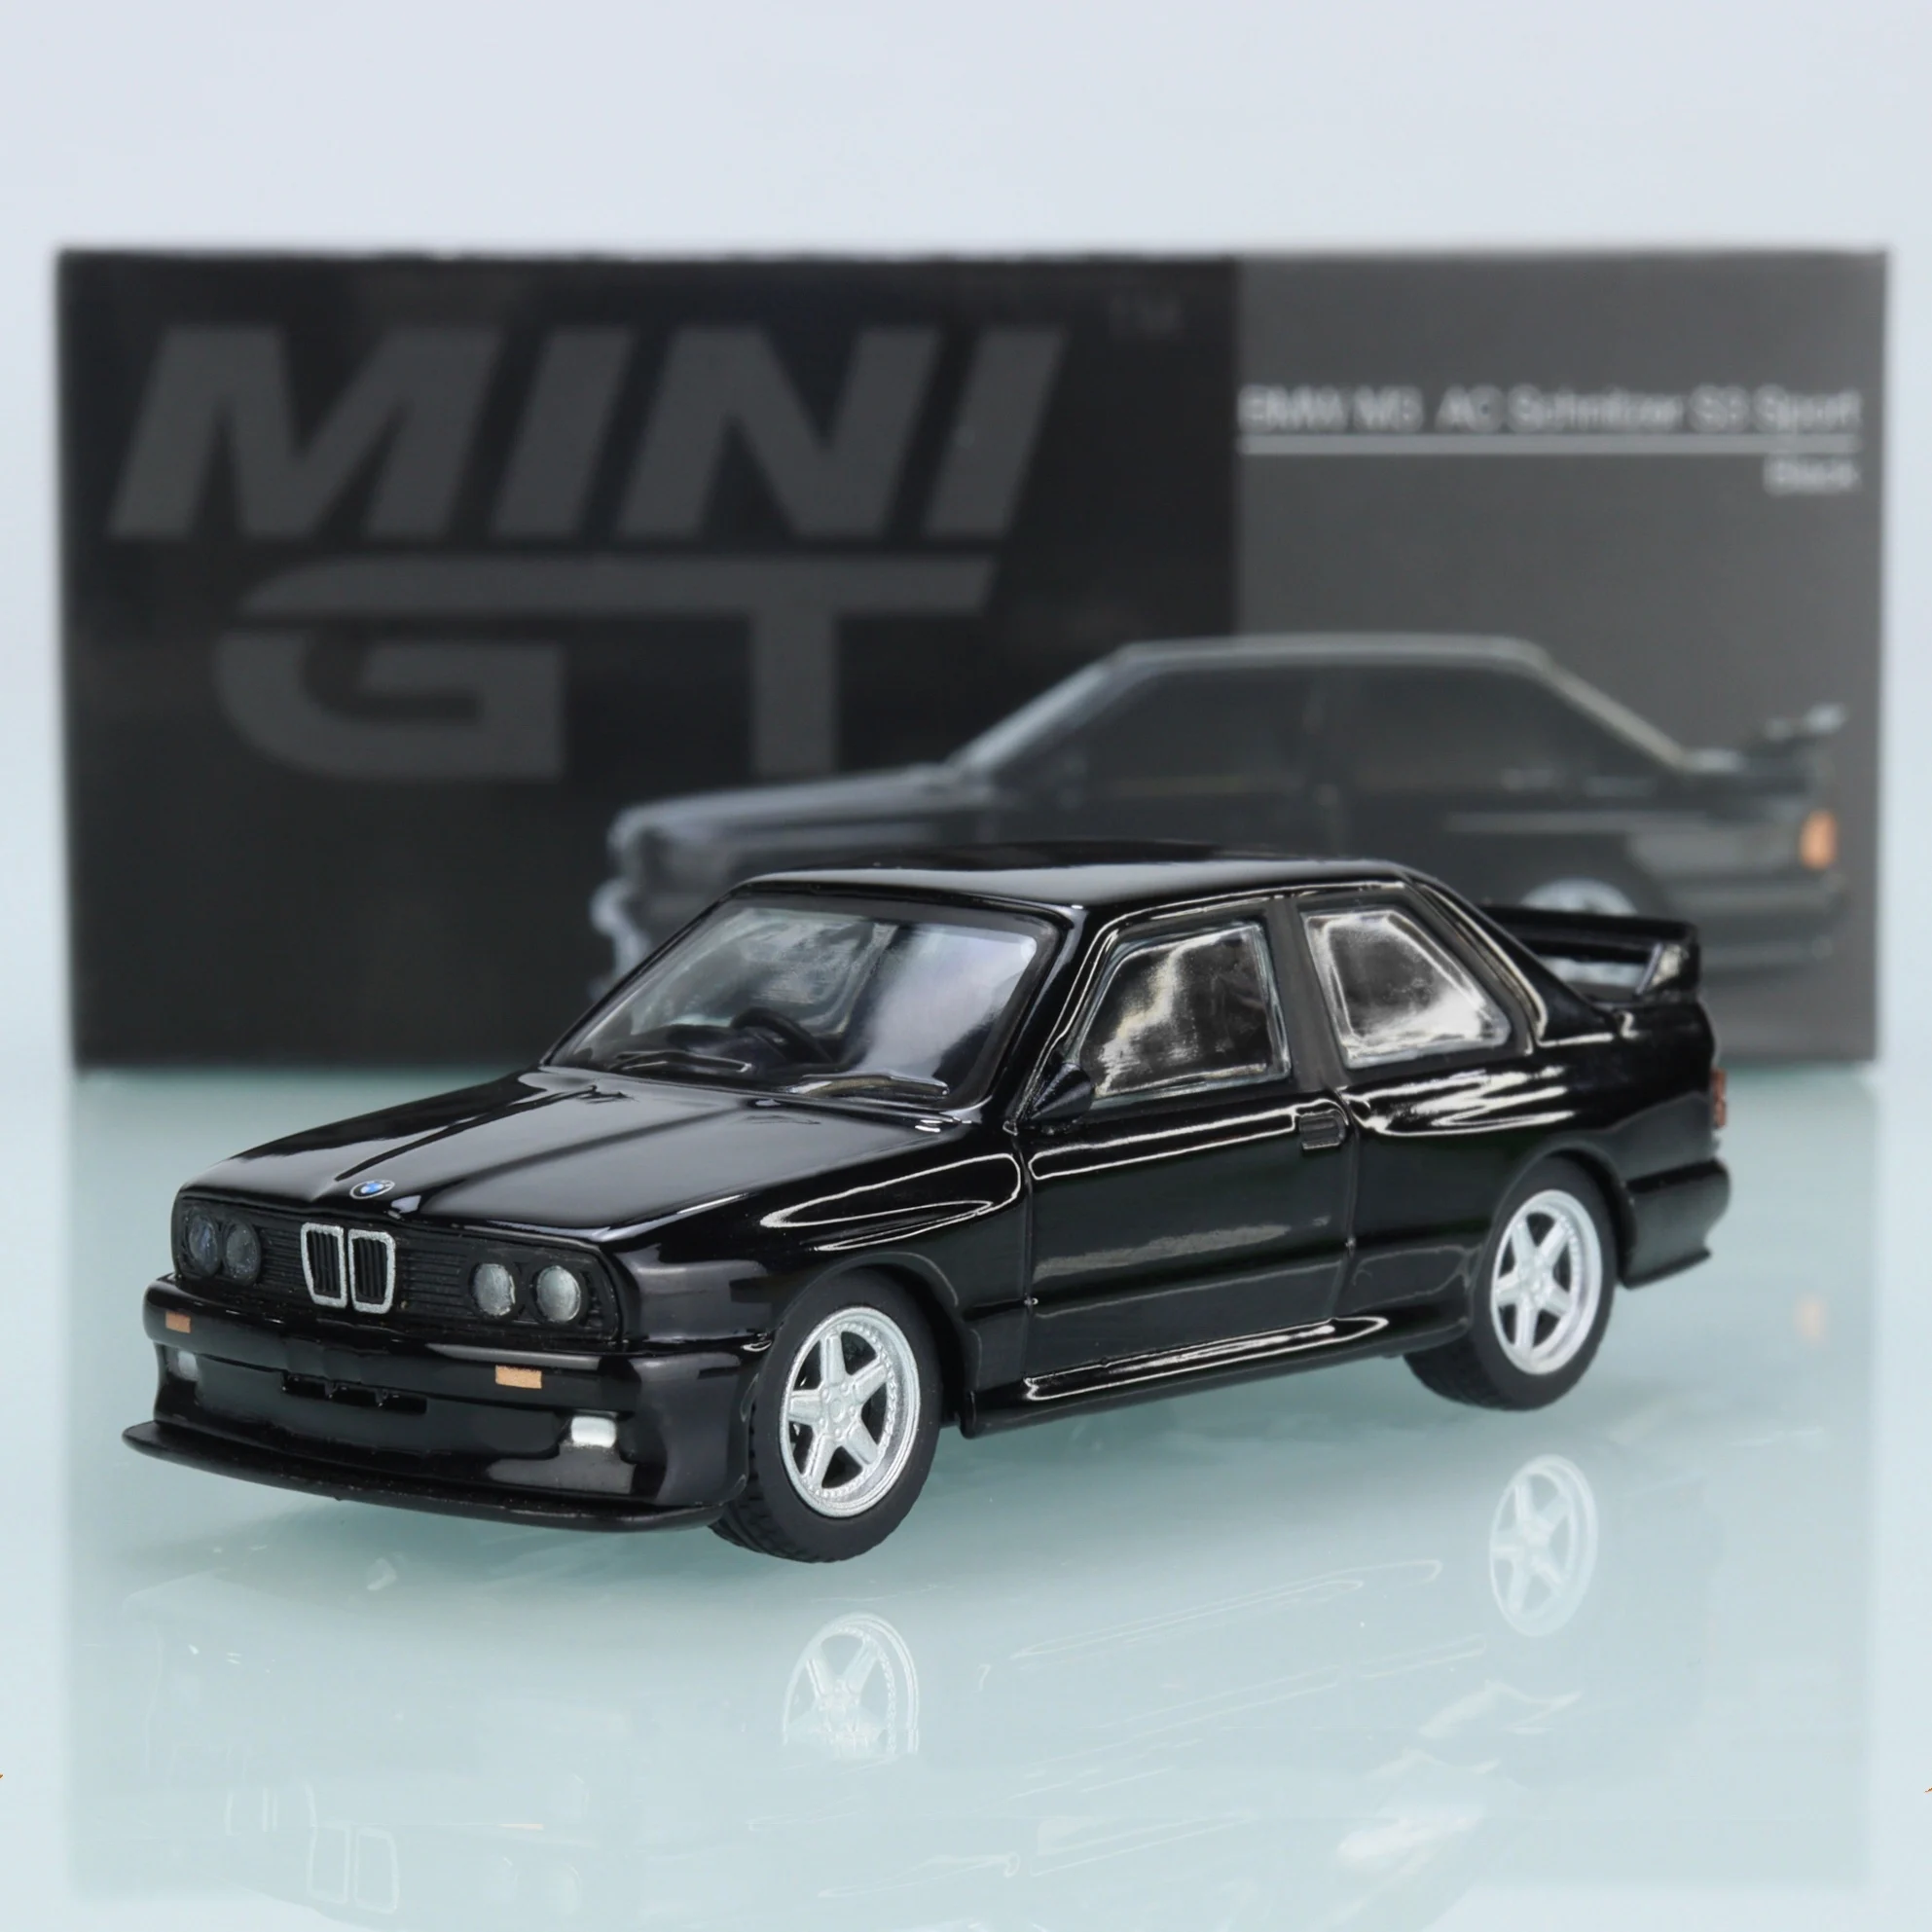 

MINI GT 1:64 BMW M3 AC Schnitzer S3 Sport Metal Die-cast Simulation Model Cars Toys